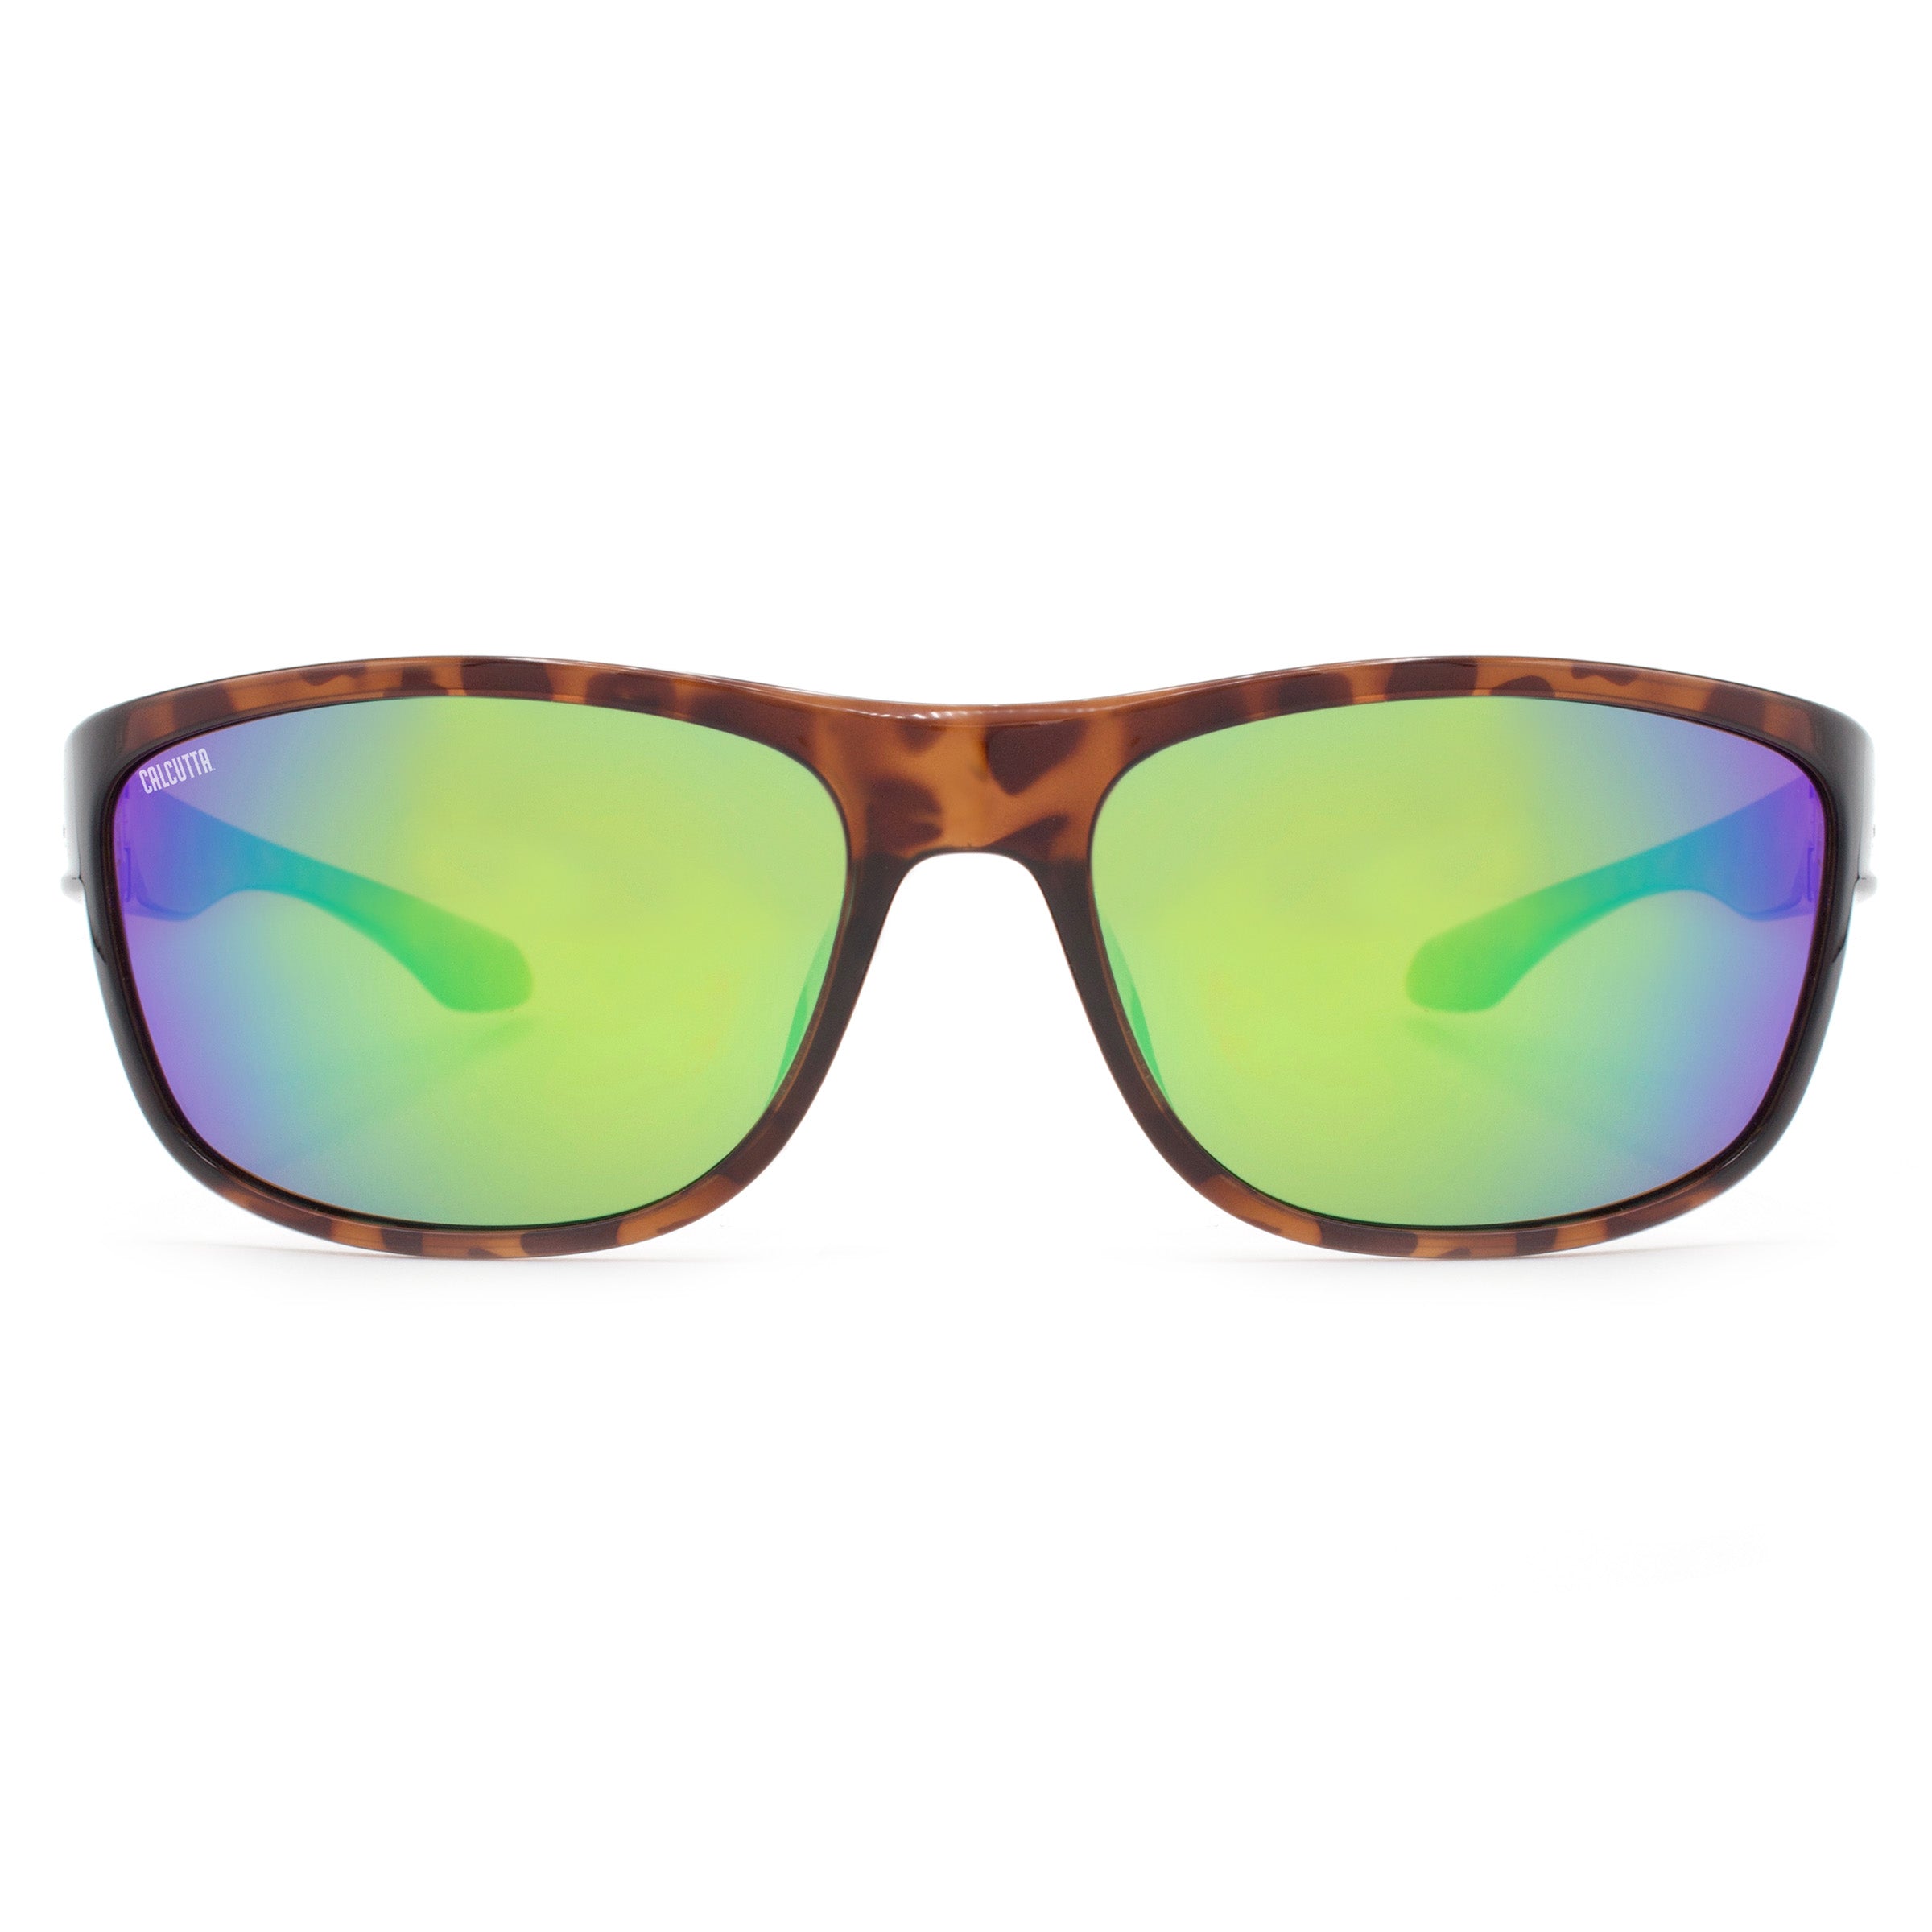 Calcutta Cross sunglasses tortoise frame green mirror lens front